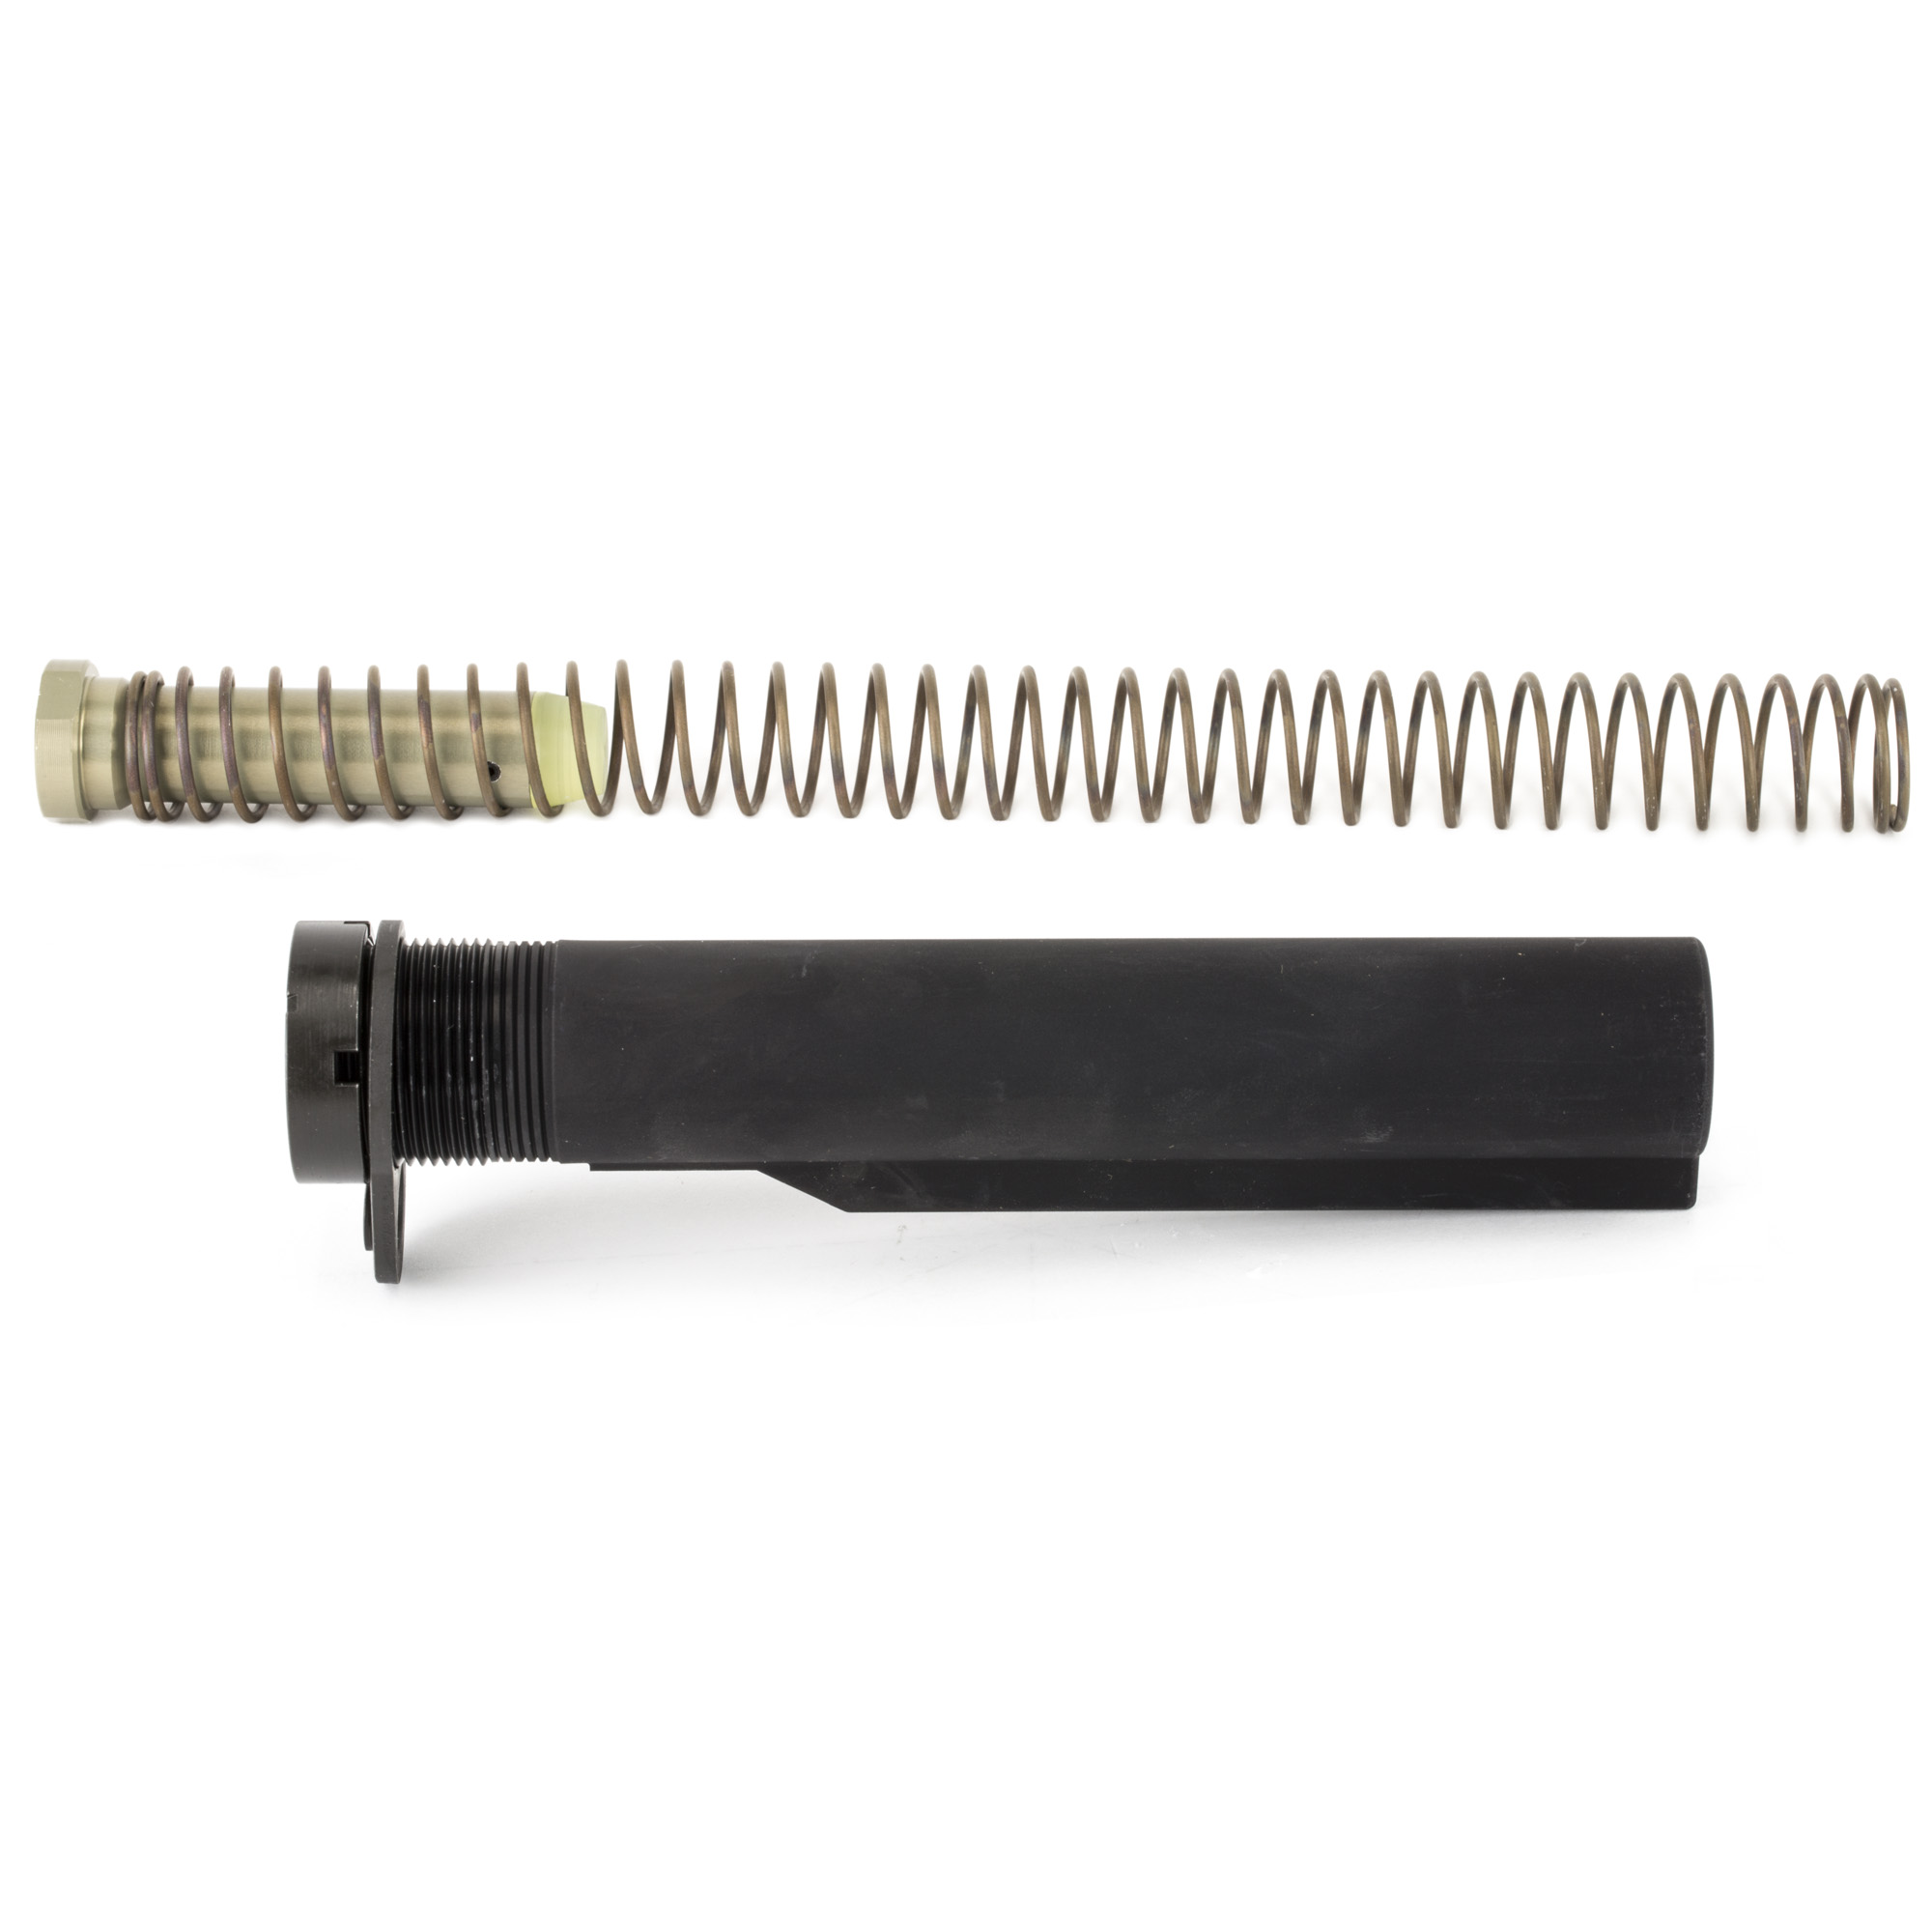 BCM Milspec Carbine Stock Hardware MOUNTING KIT (Mil-Spec)